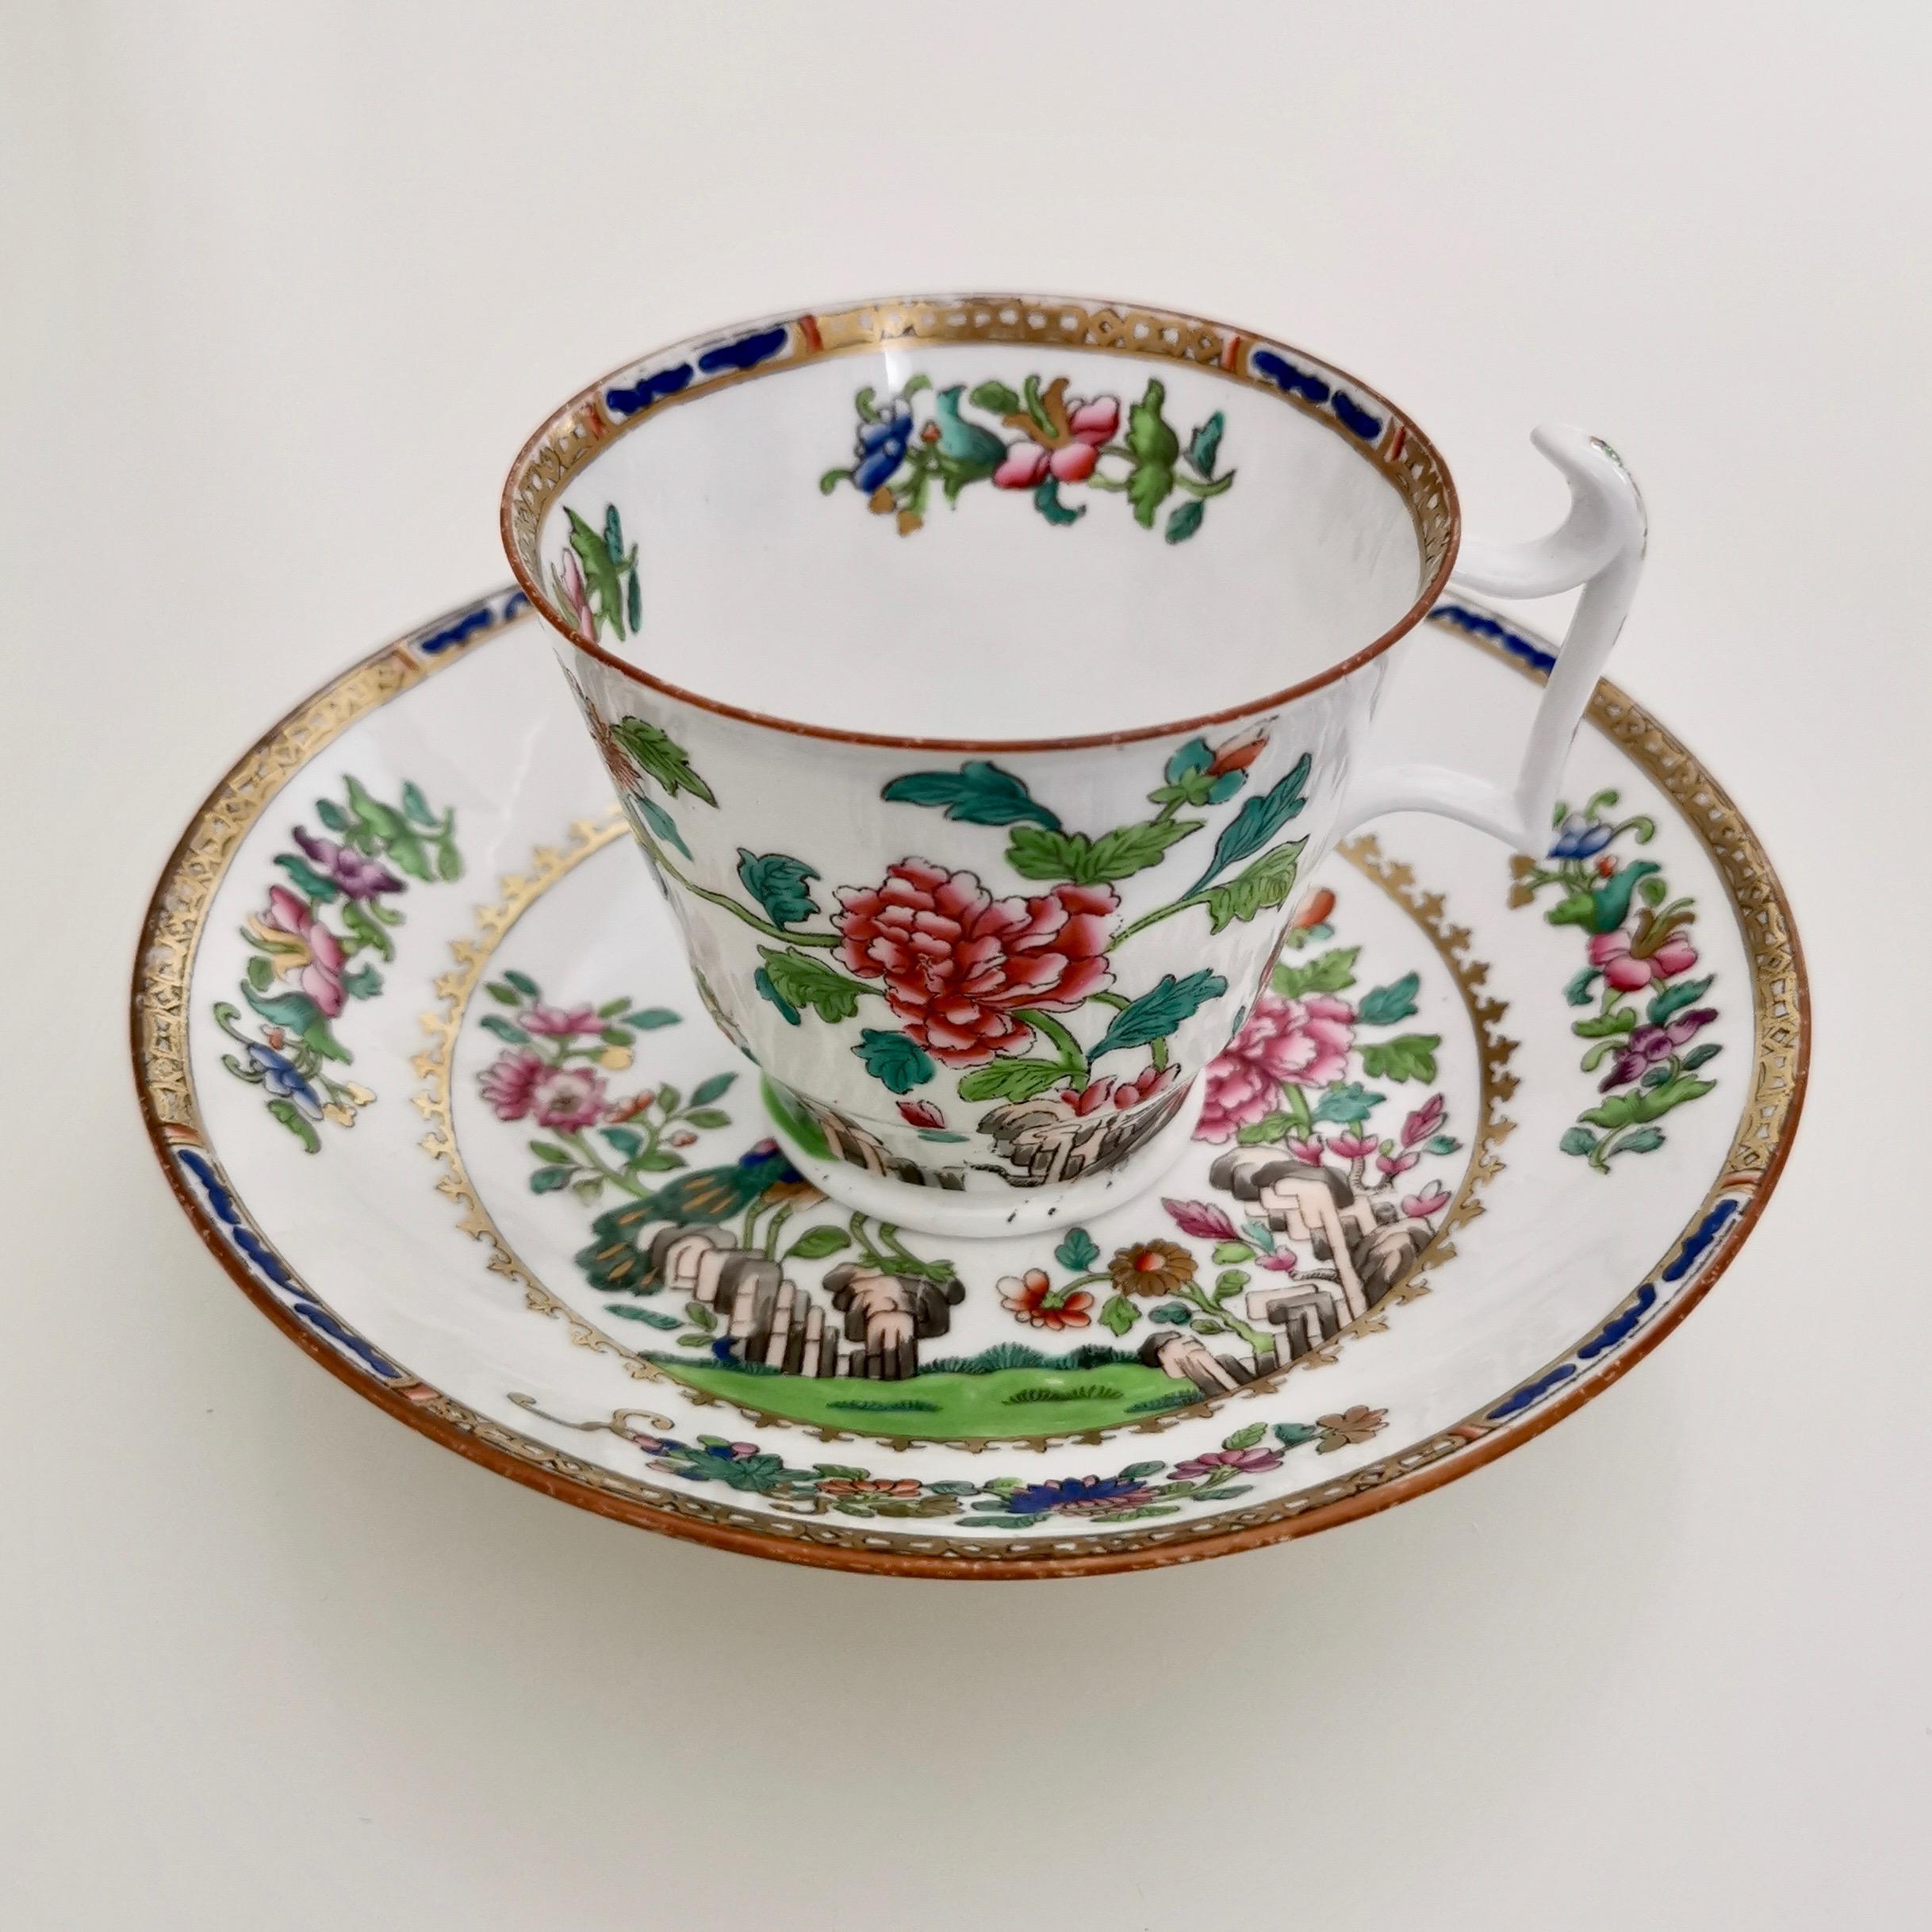 Hand-Painted Spode Porcelain Teacup Trio, Peacock Pattern 2083, Regency, 1814-1825